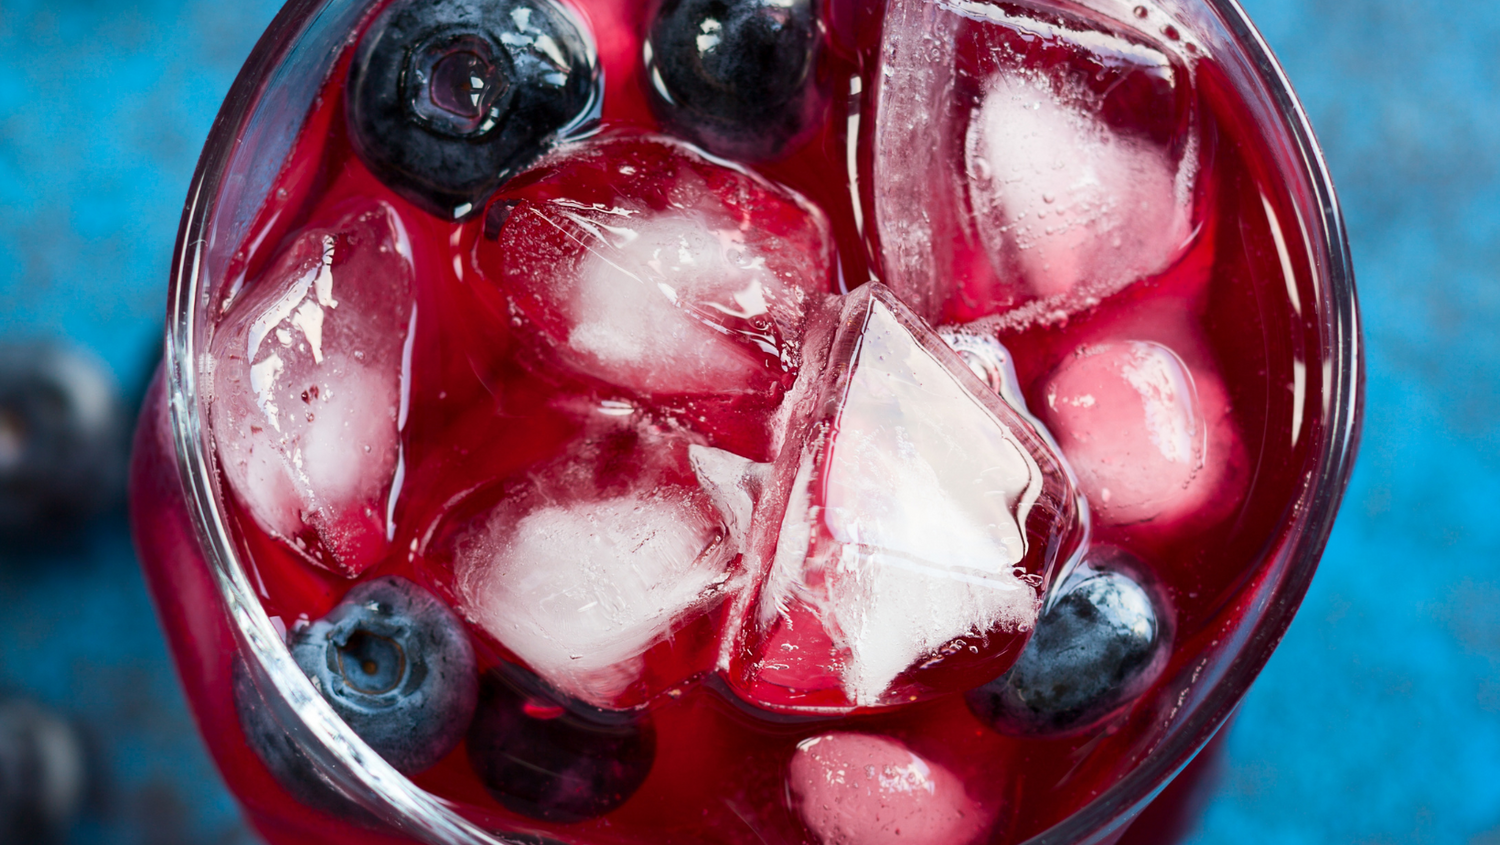 Blueberry Gin & Tonic